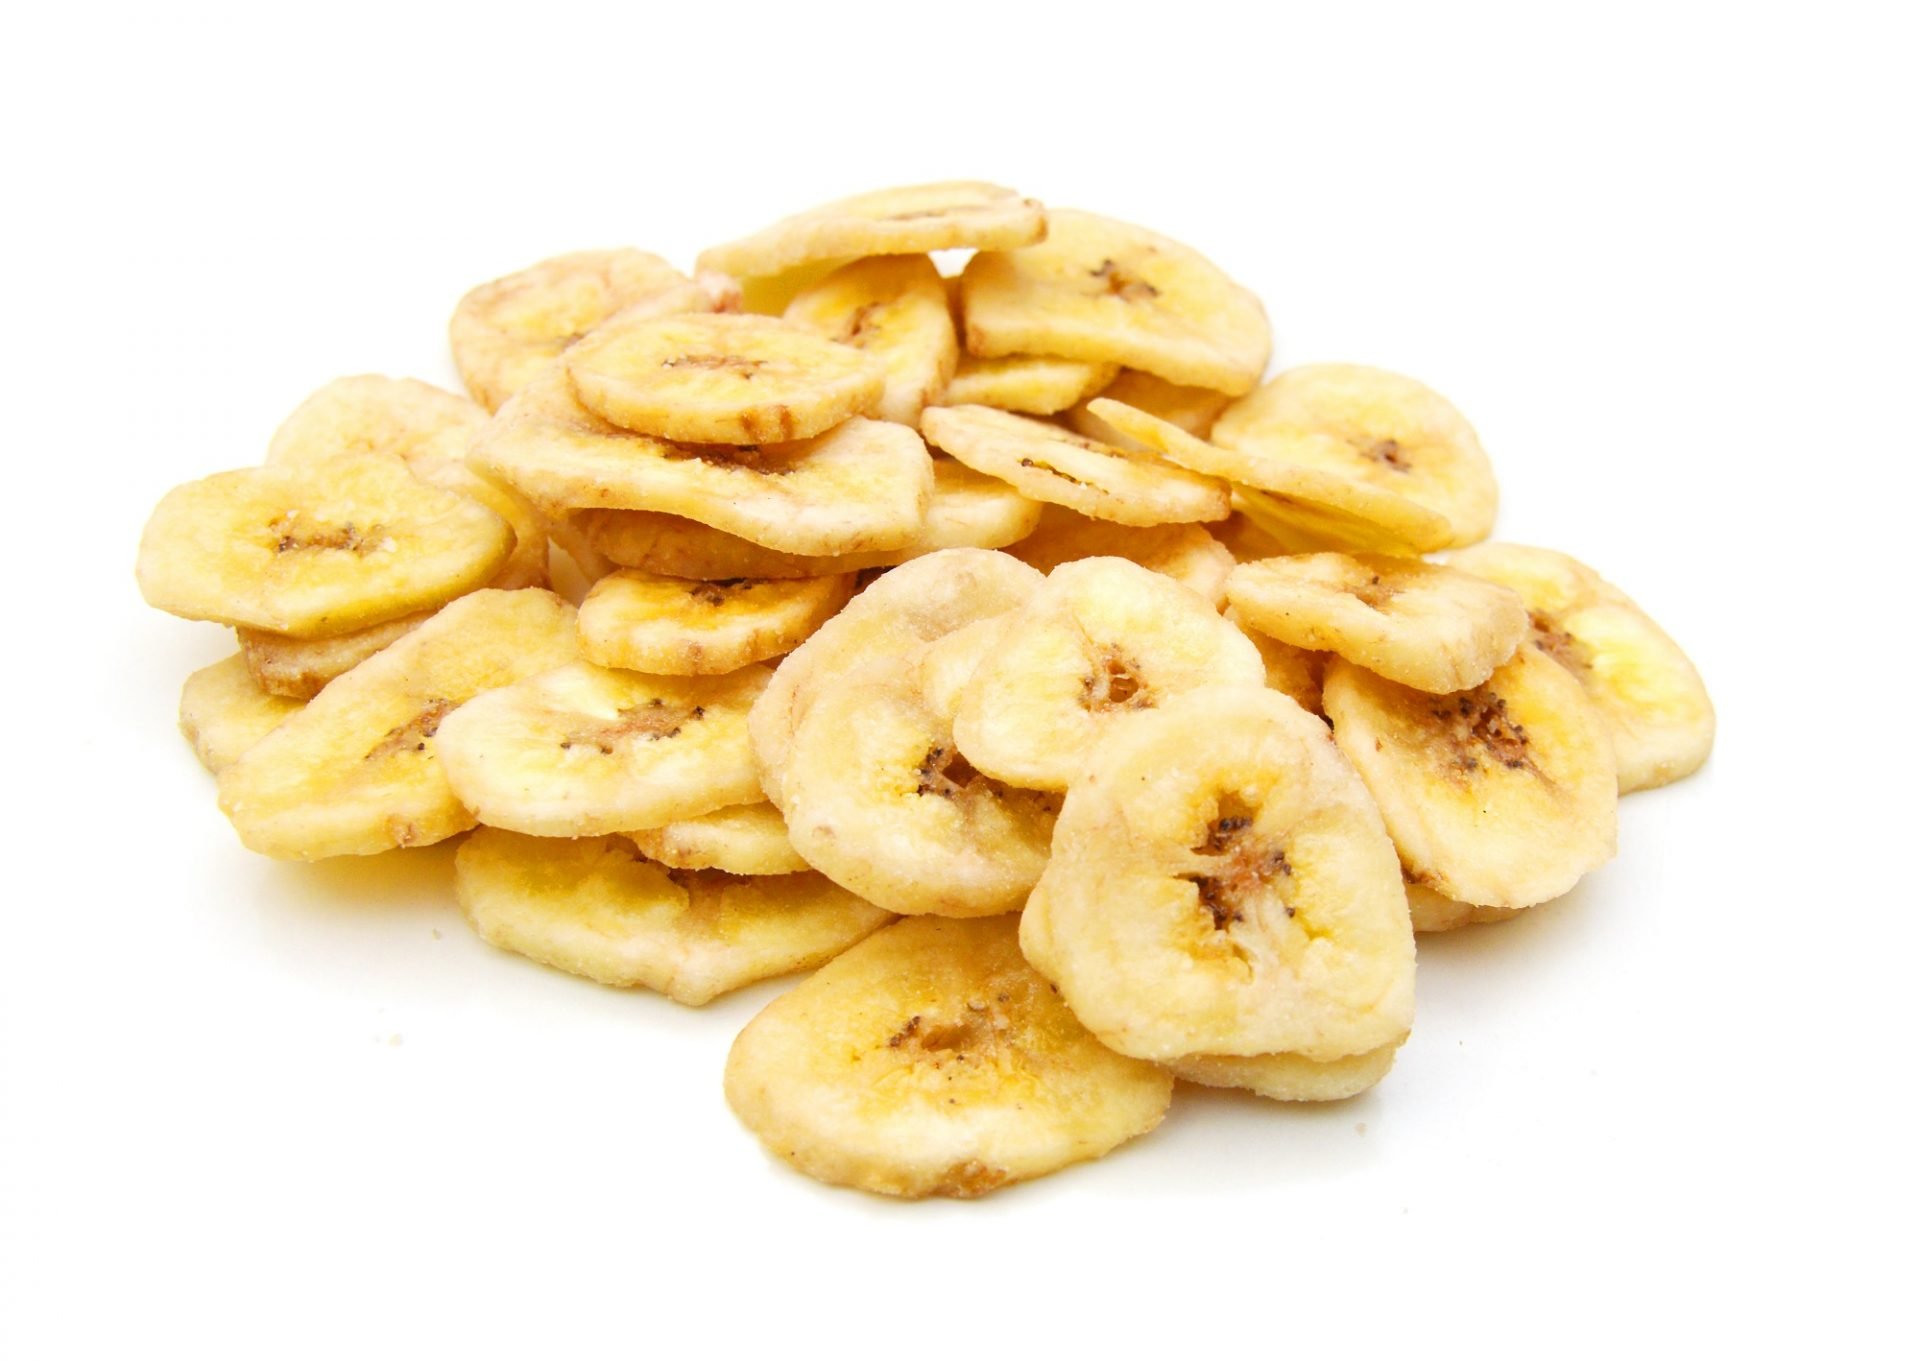 Sliced and dried bananas